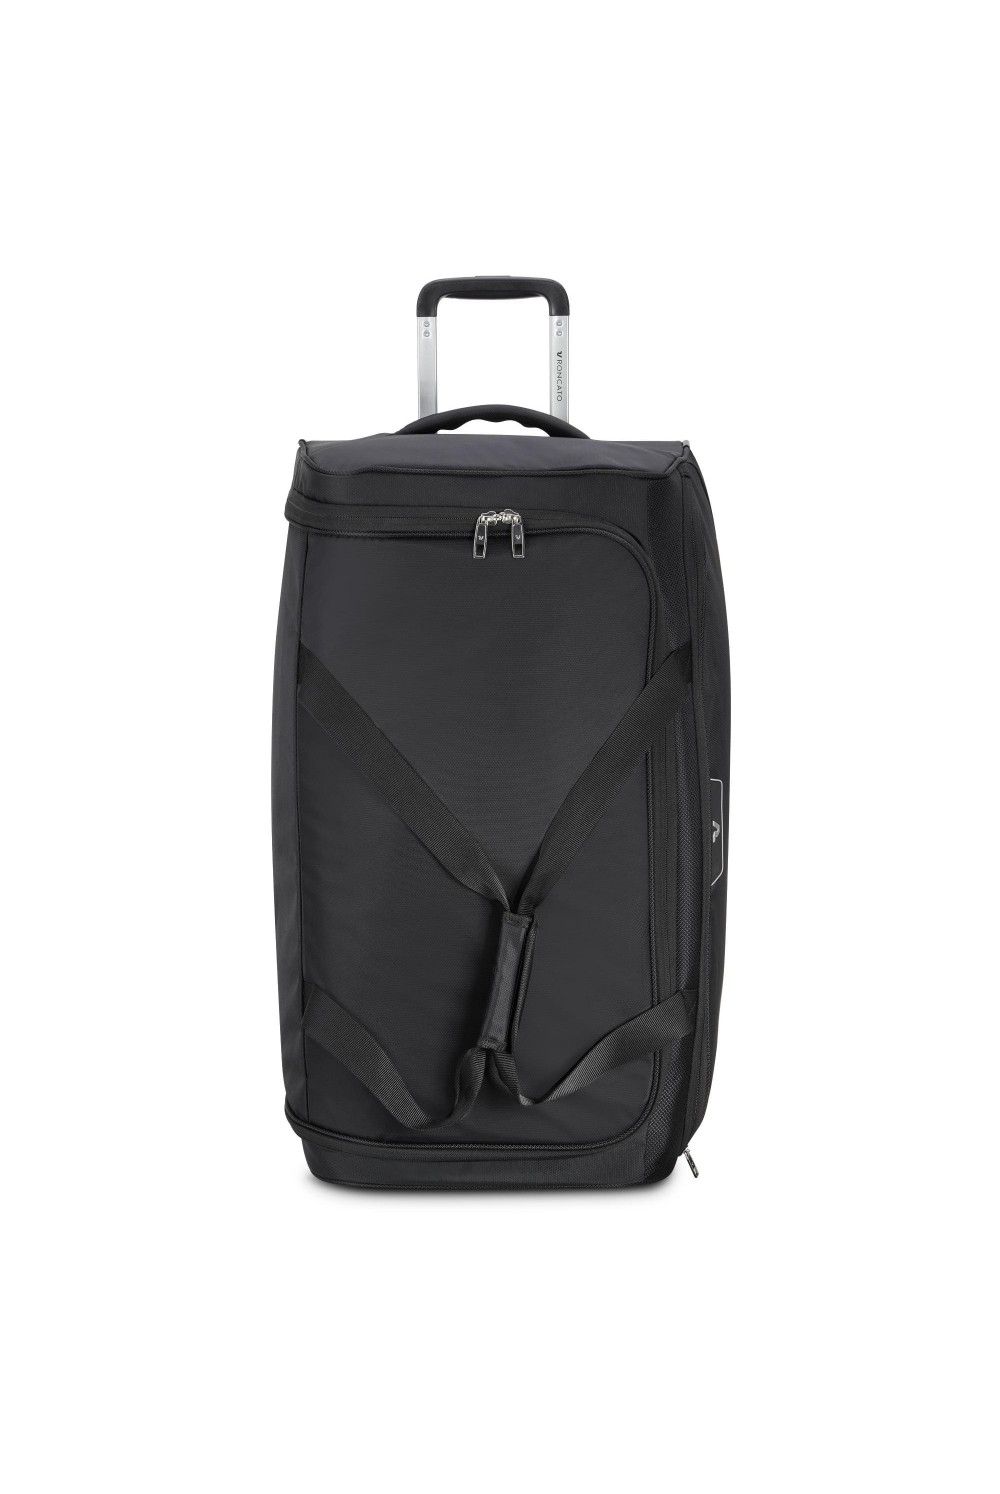 Roncato Joy travel bag 70cm 2 wheel